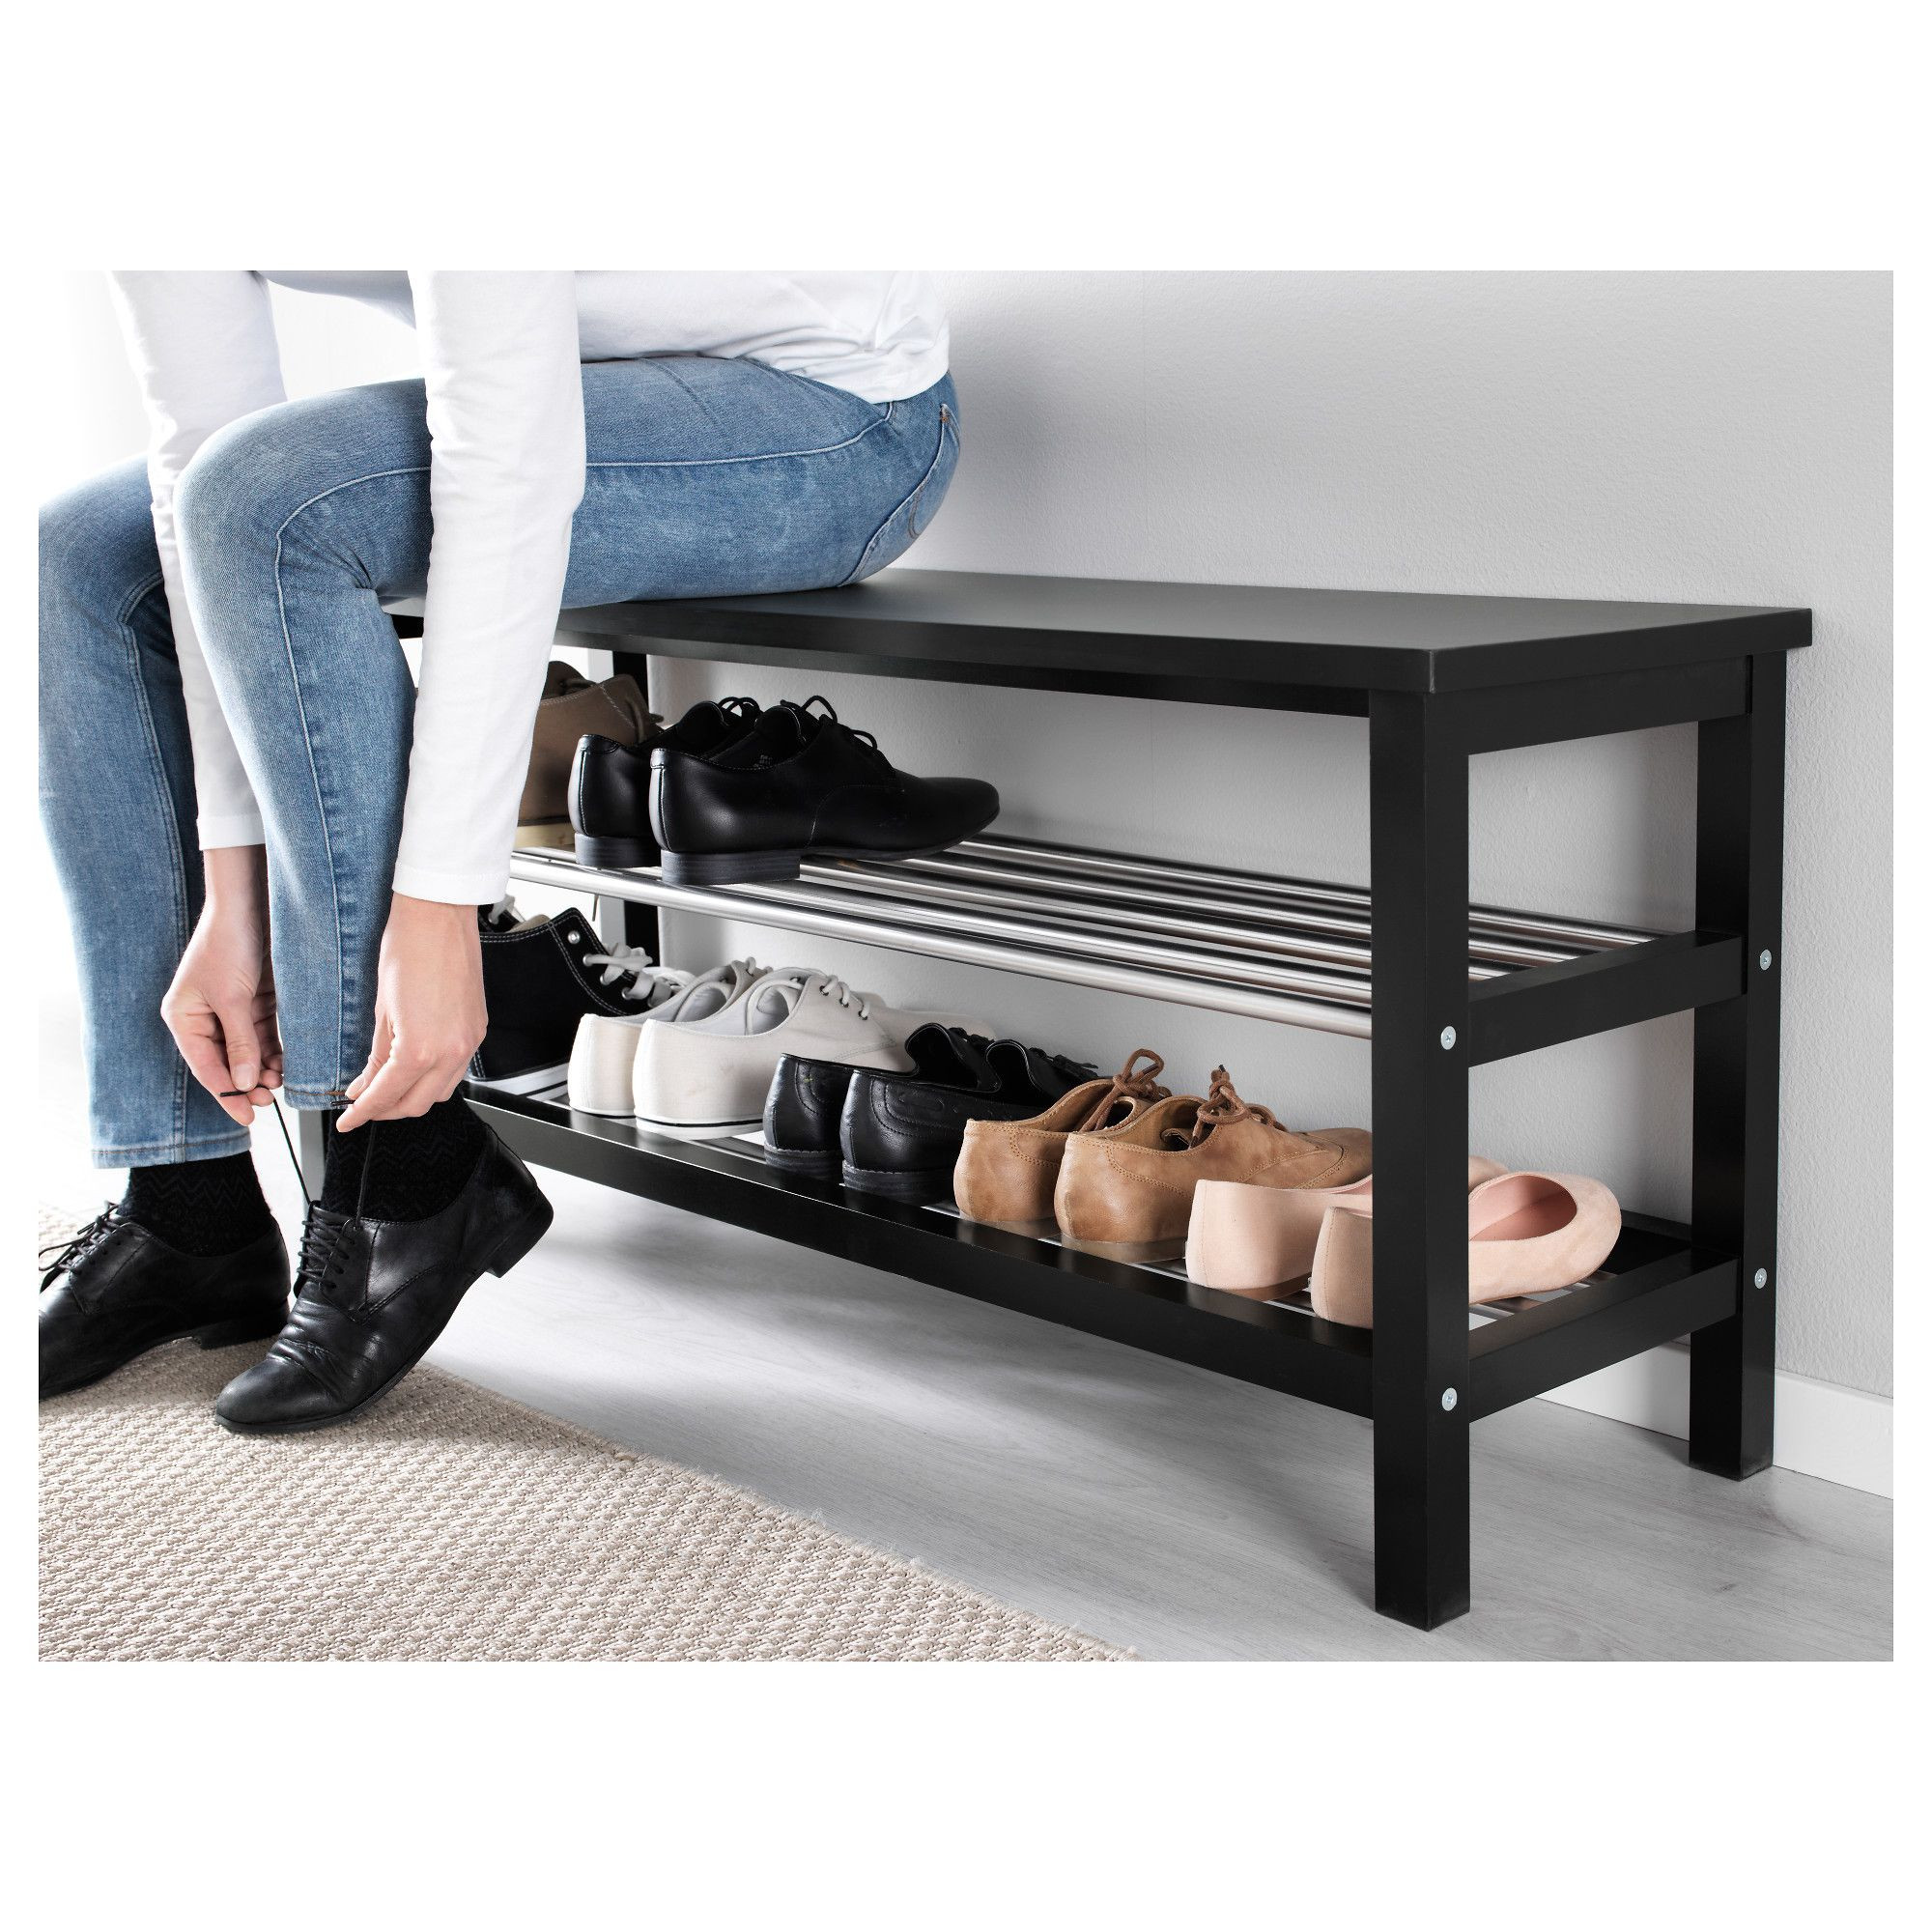 Hemnes Bench With Shoe Storage
 IKEA TJUSIG Bench with shoe storage black